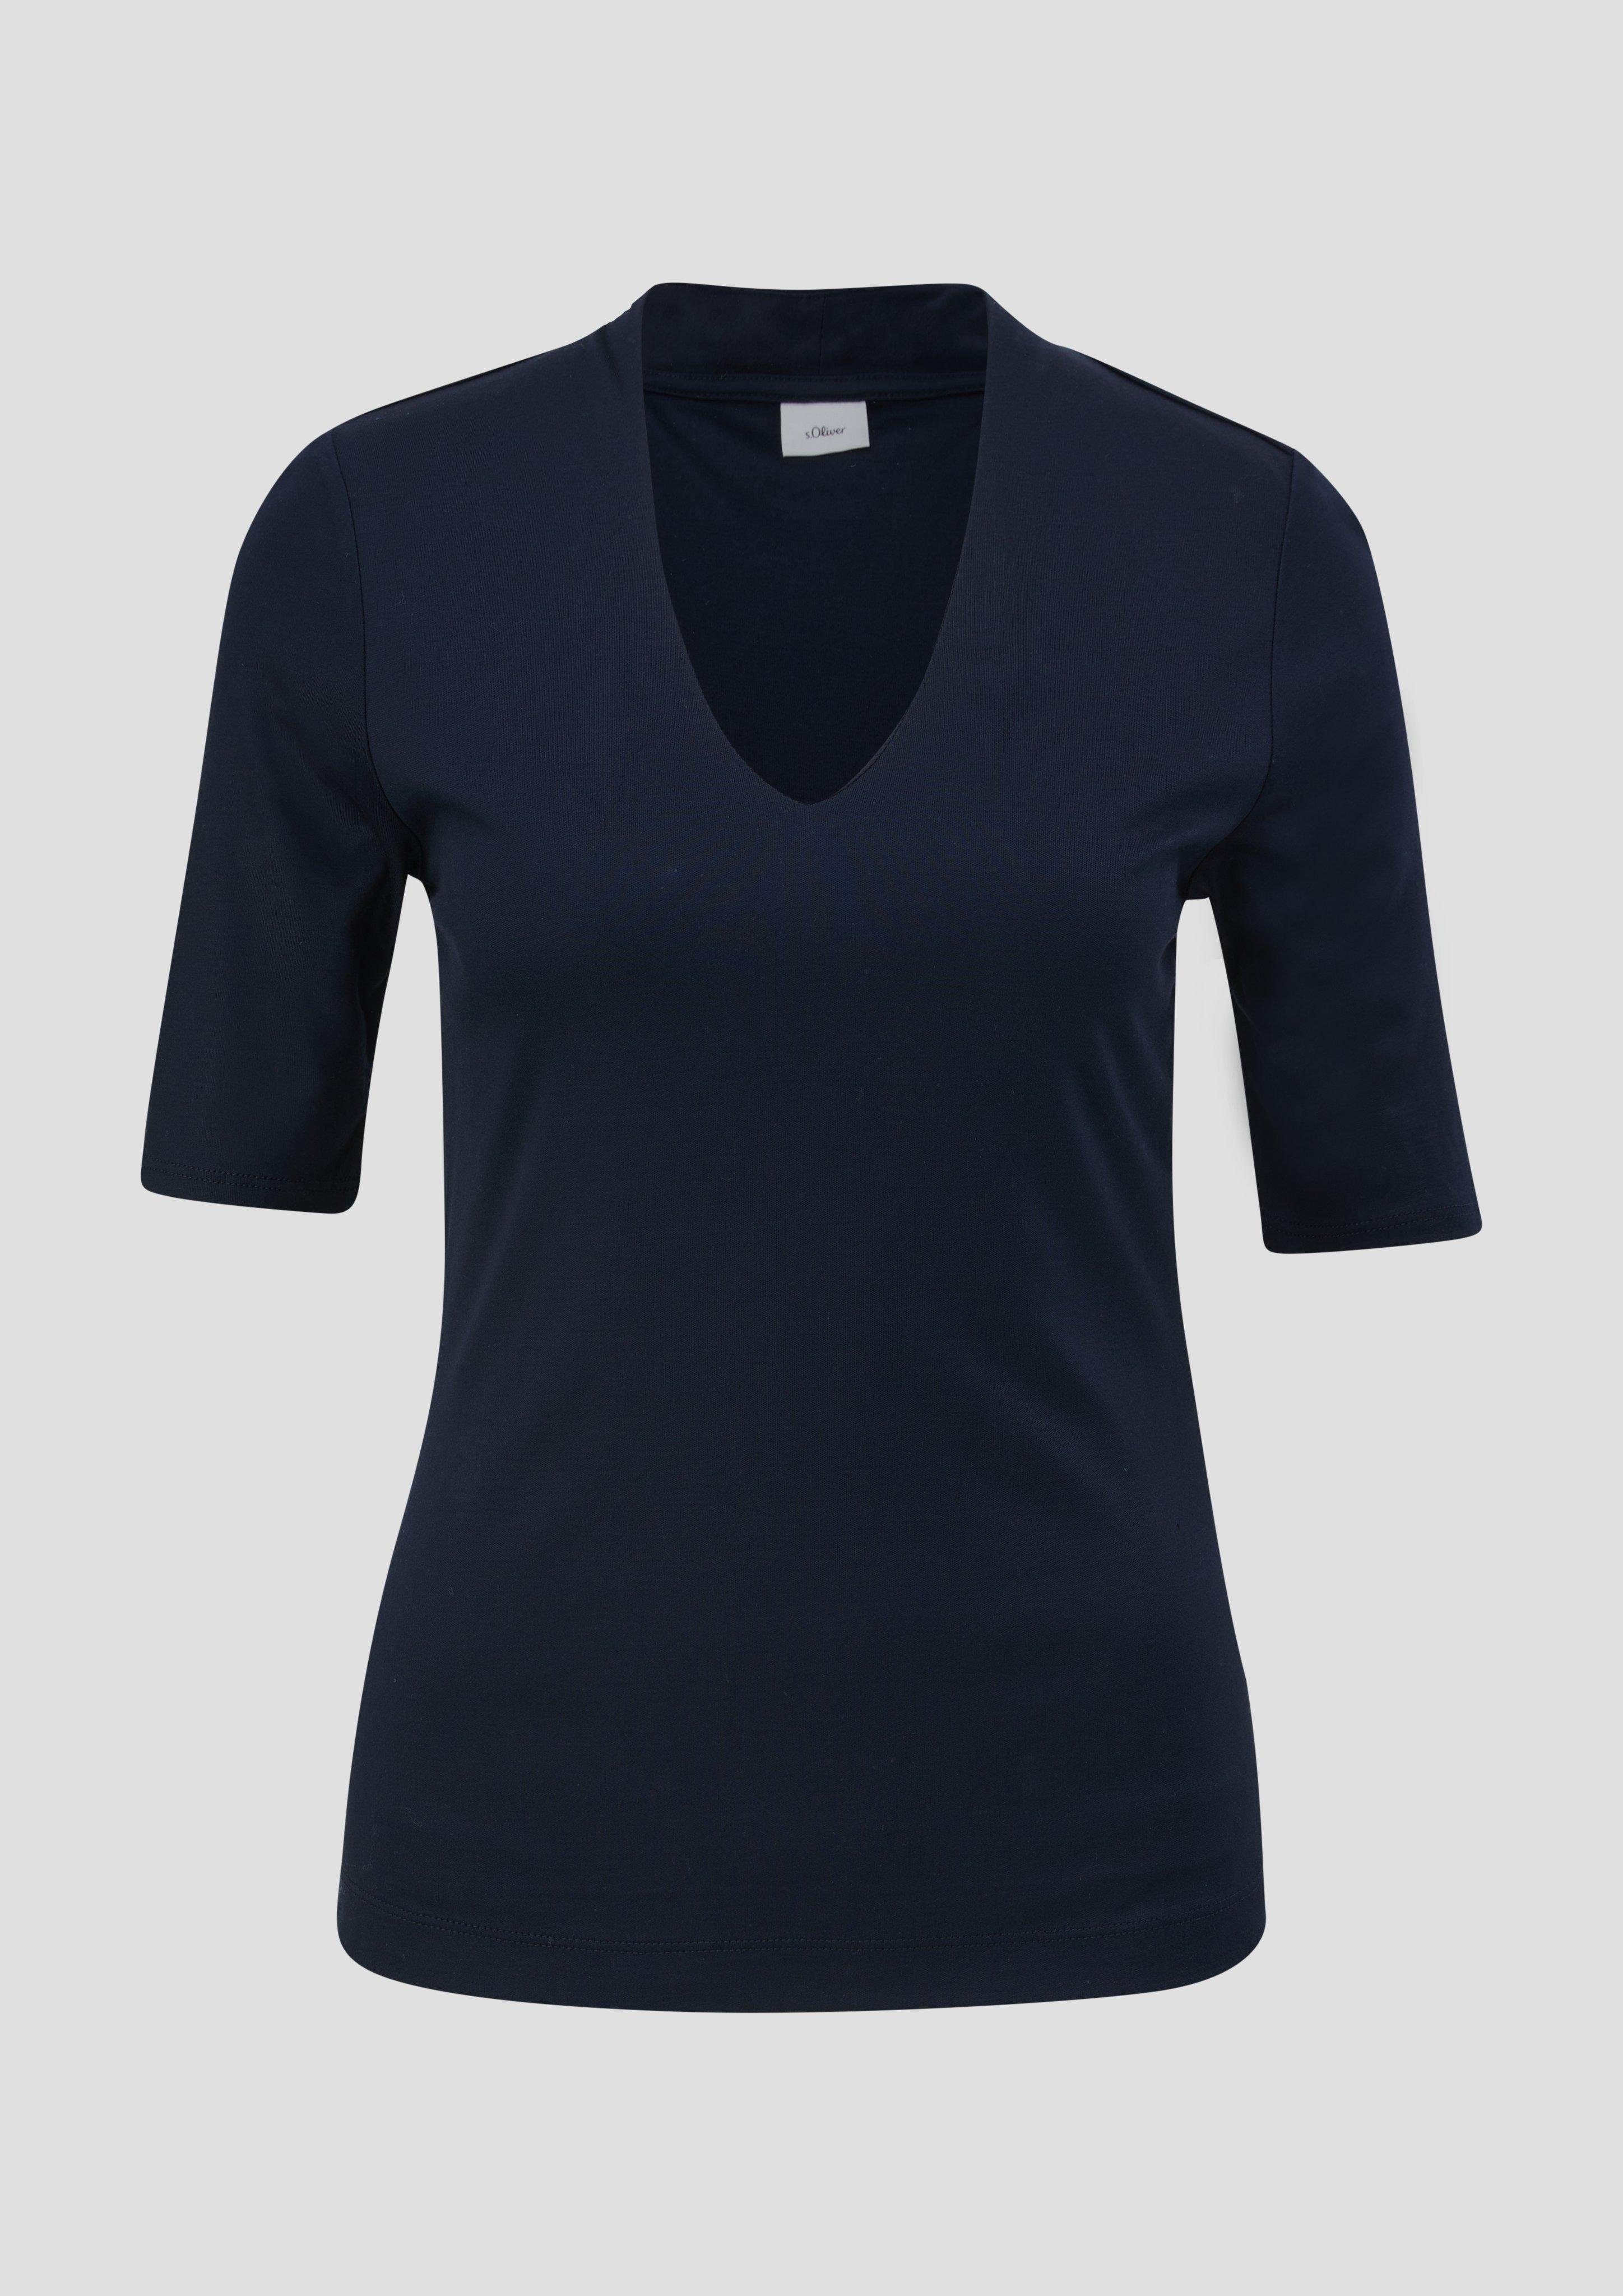 BLACK marineblau V-Ausschnitt mit LABEL Kurzarmshirt s.Oliver Raffung dunkles T-Shirt